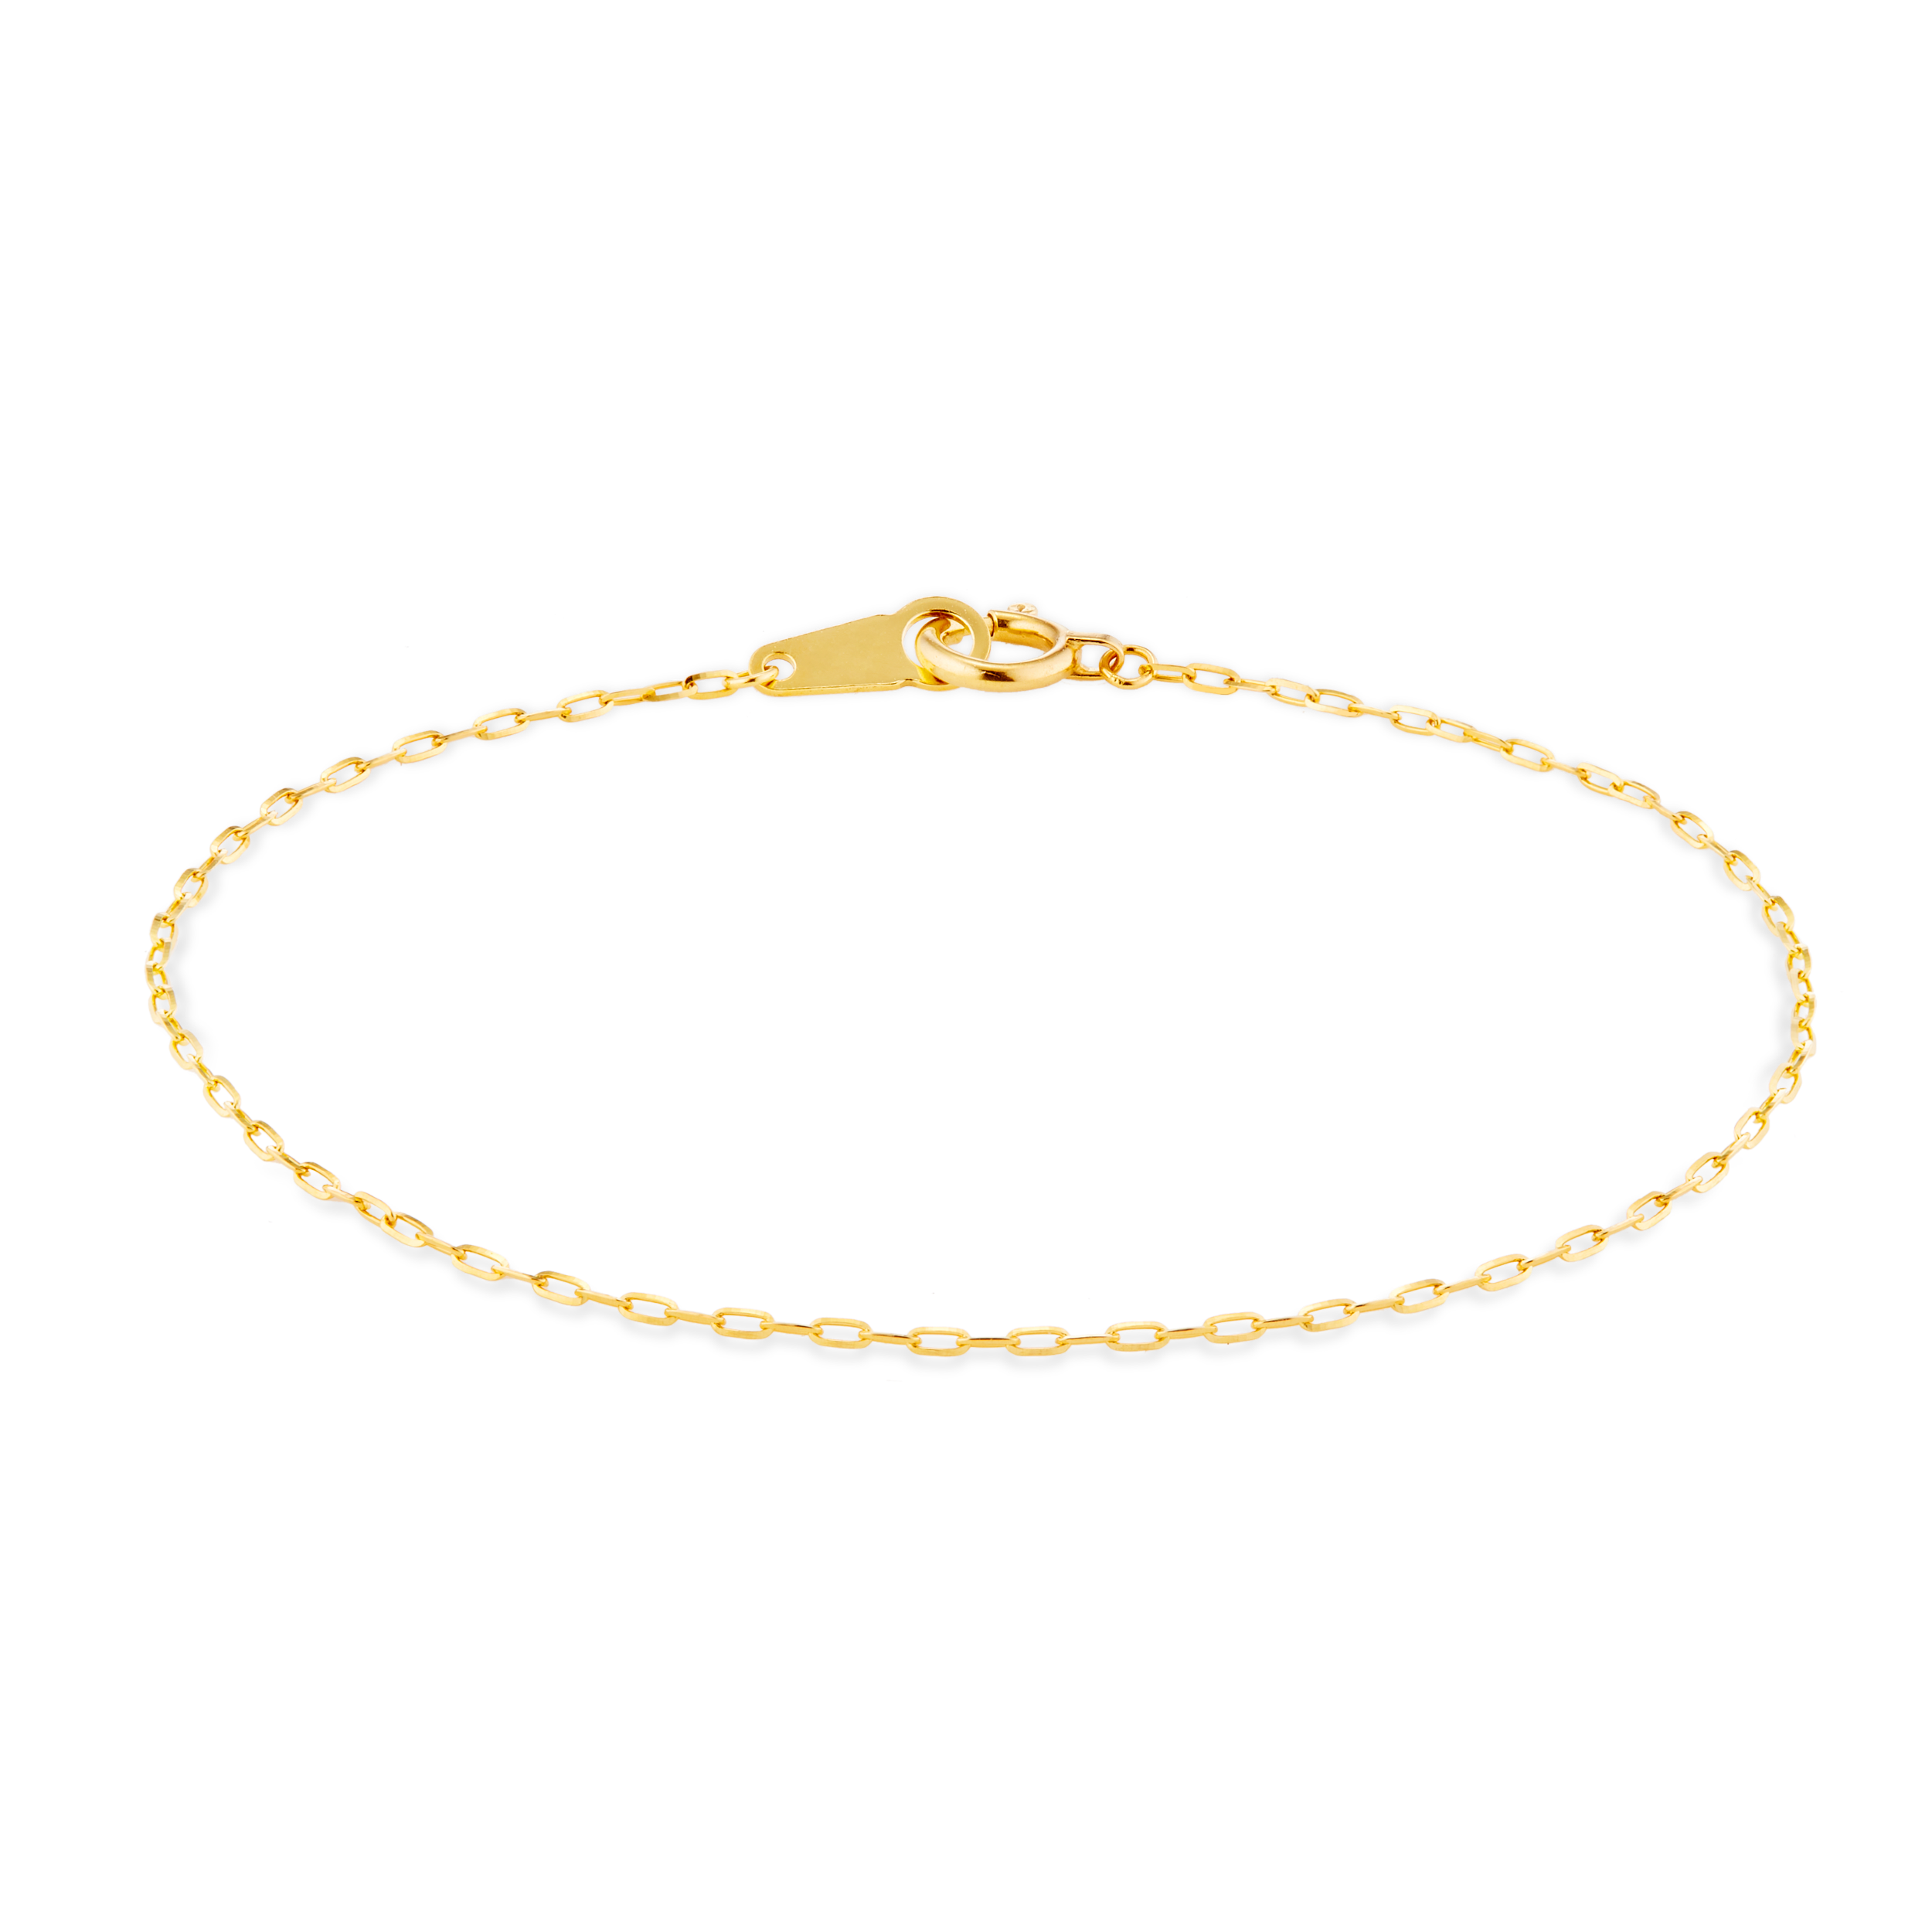 Cable Chain Bracelet Gold